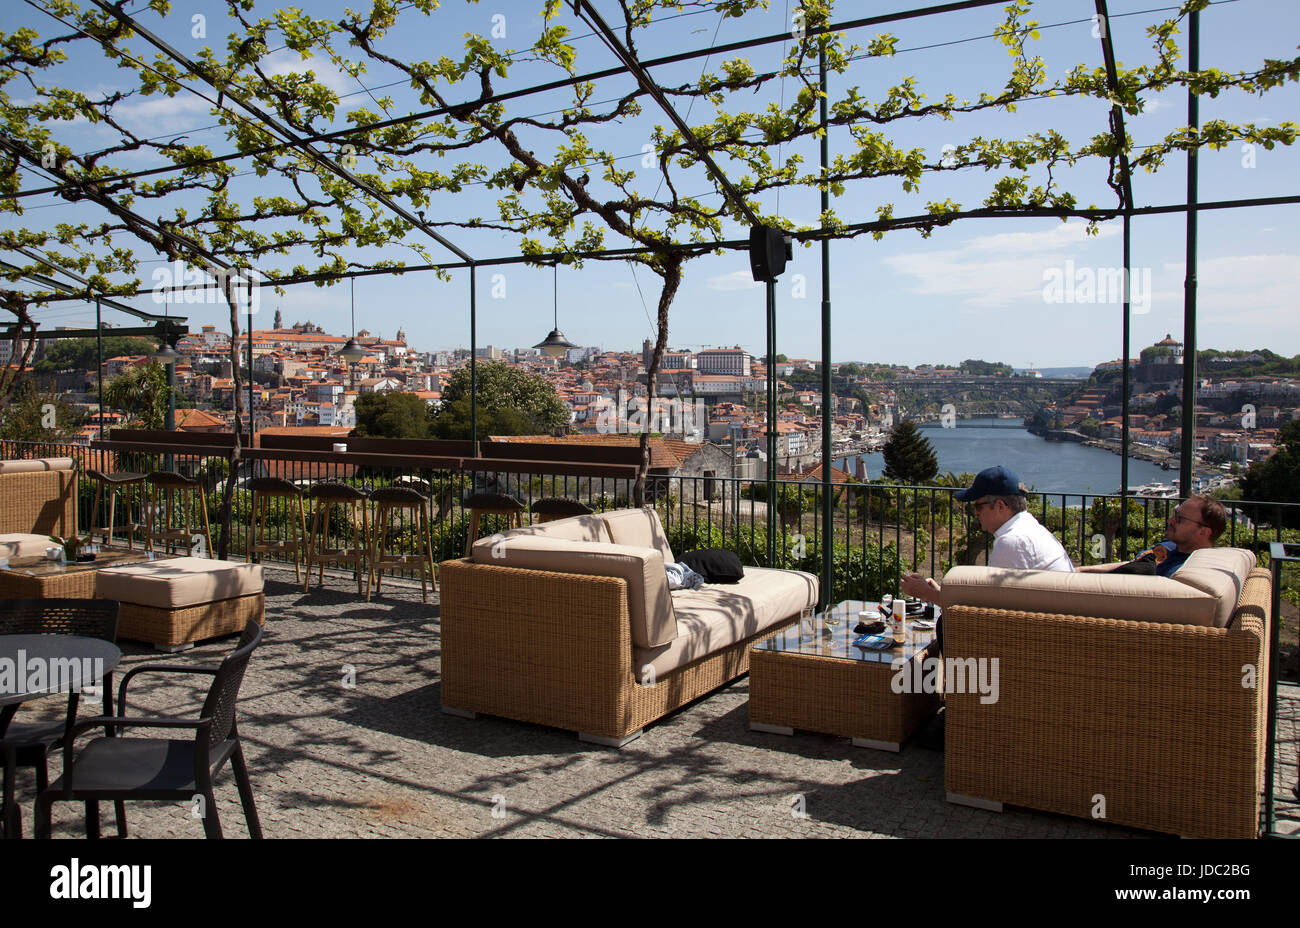 Grahams Cellar - Wine Bar Patio in Porto - Portugal Stock Photo - Alamy